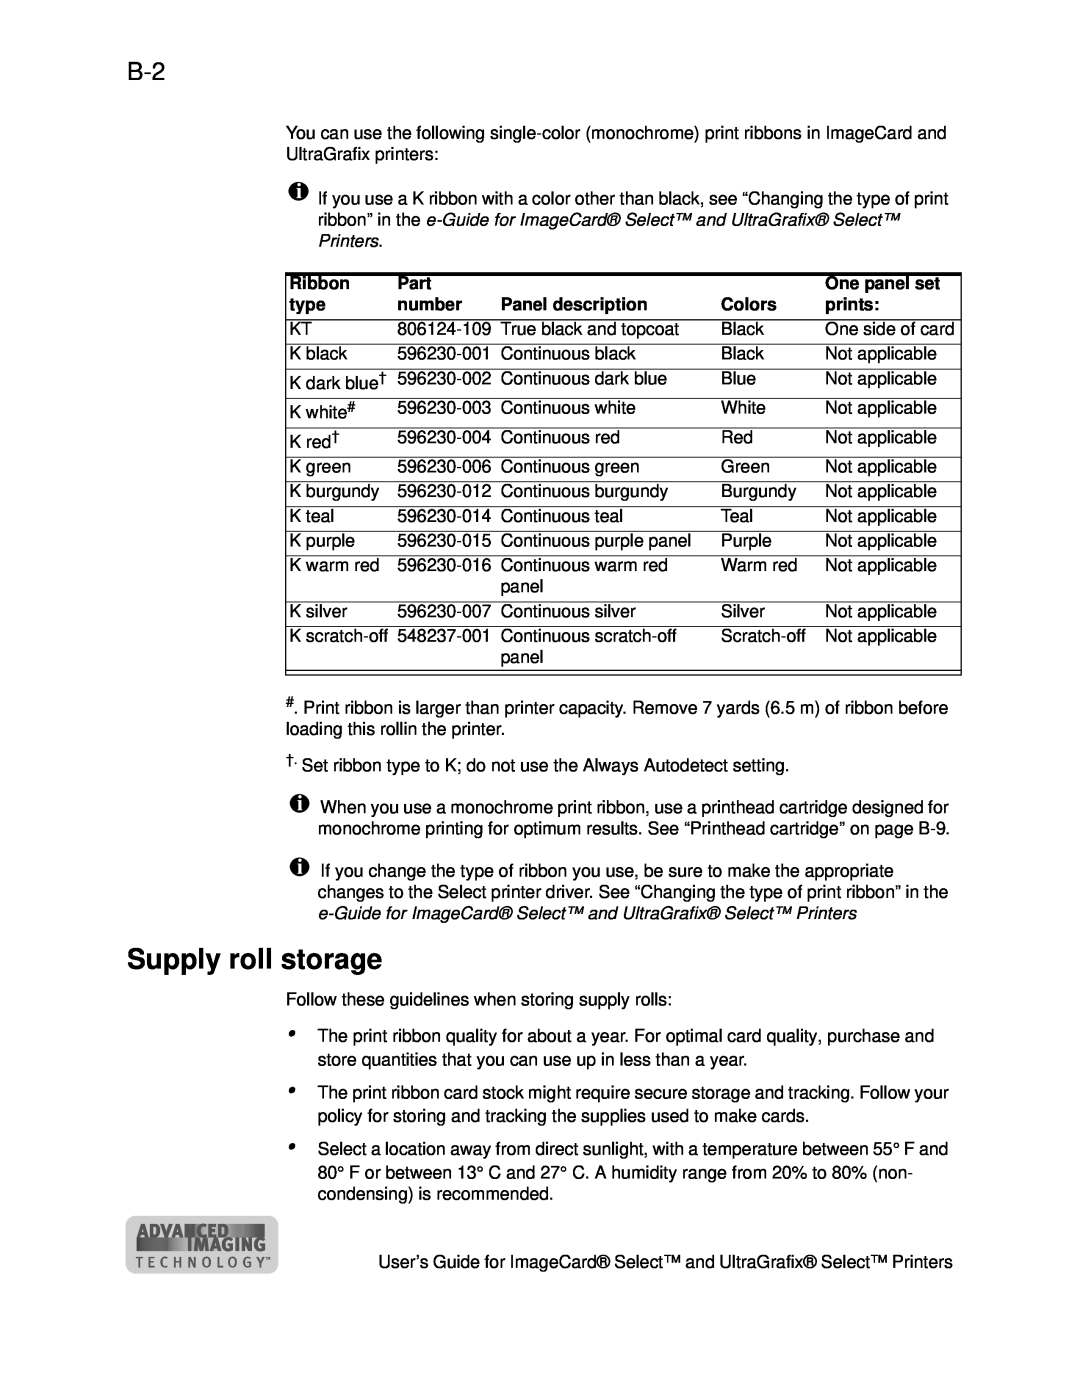 Datacard Group ImageCard SelectTM and UltraGrafix SelectTM Printers manual Supply roll storage, Ribbon, Part, type, number 